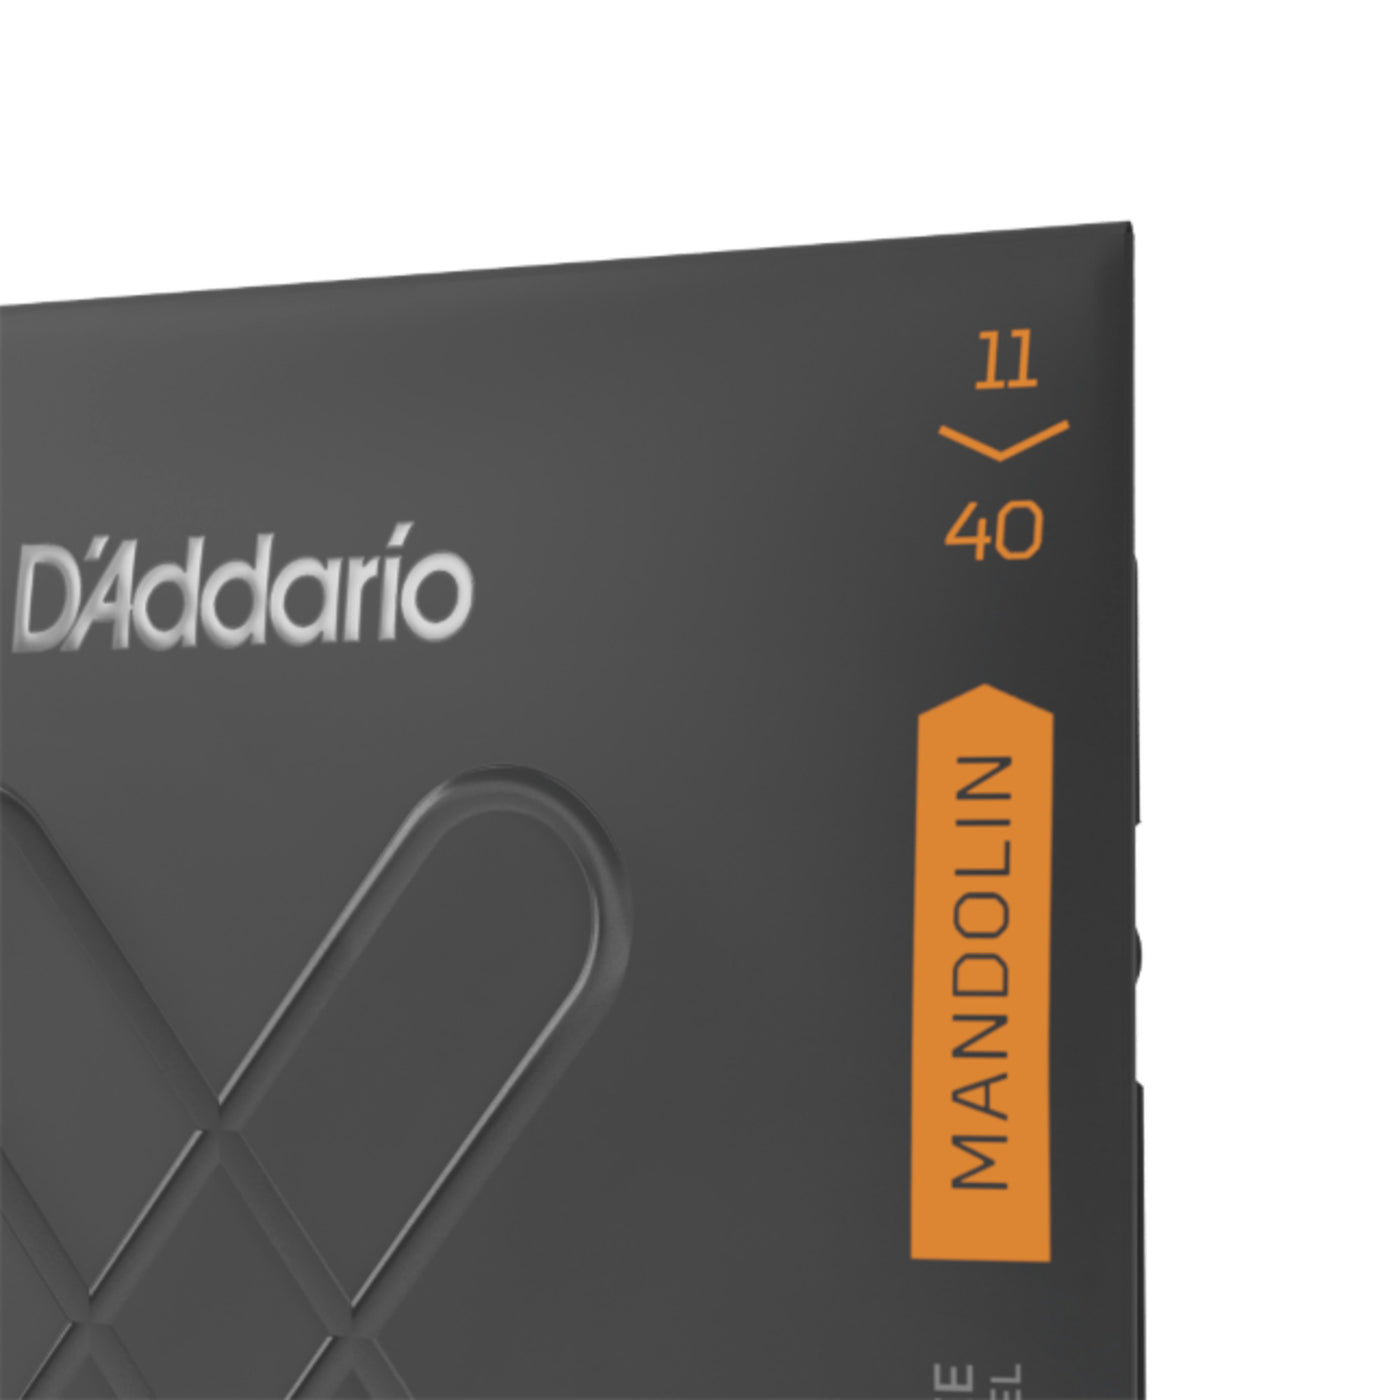 D'Addario XT Phosphor Bronze Mandolin Strings, Medium, 11-40 (XTM1140)